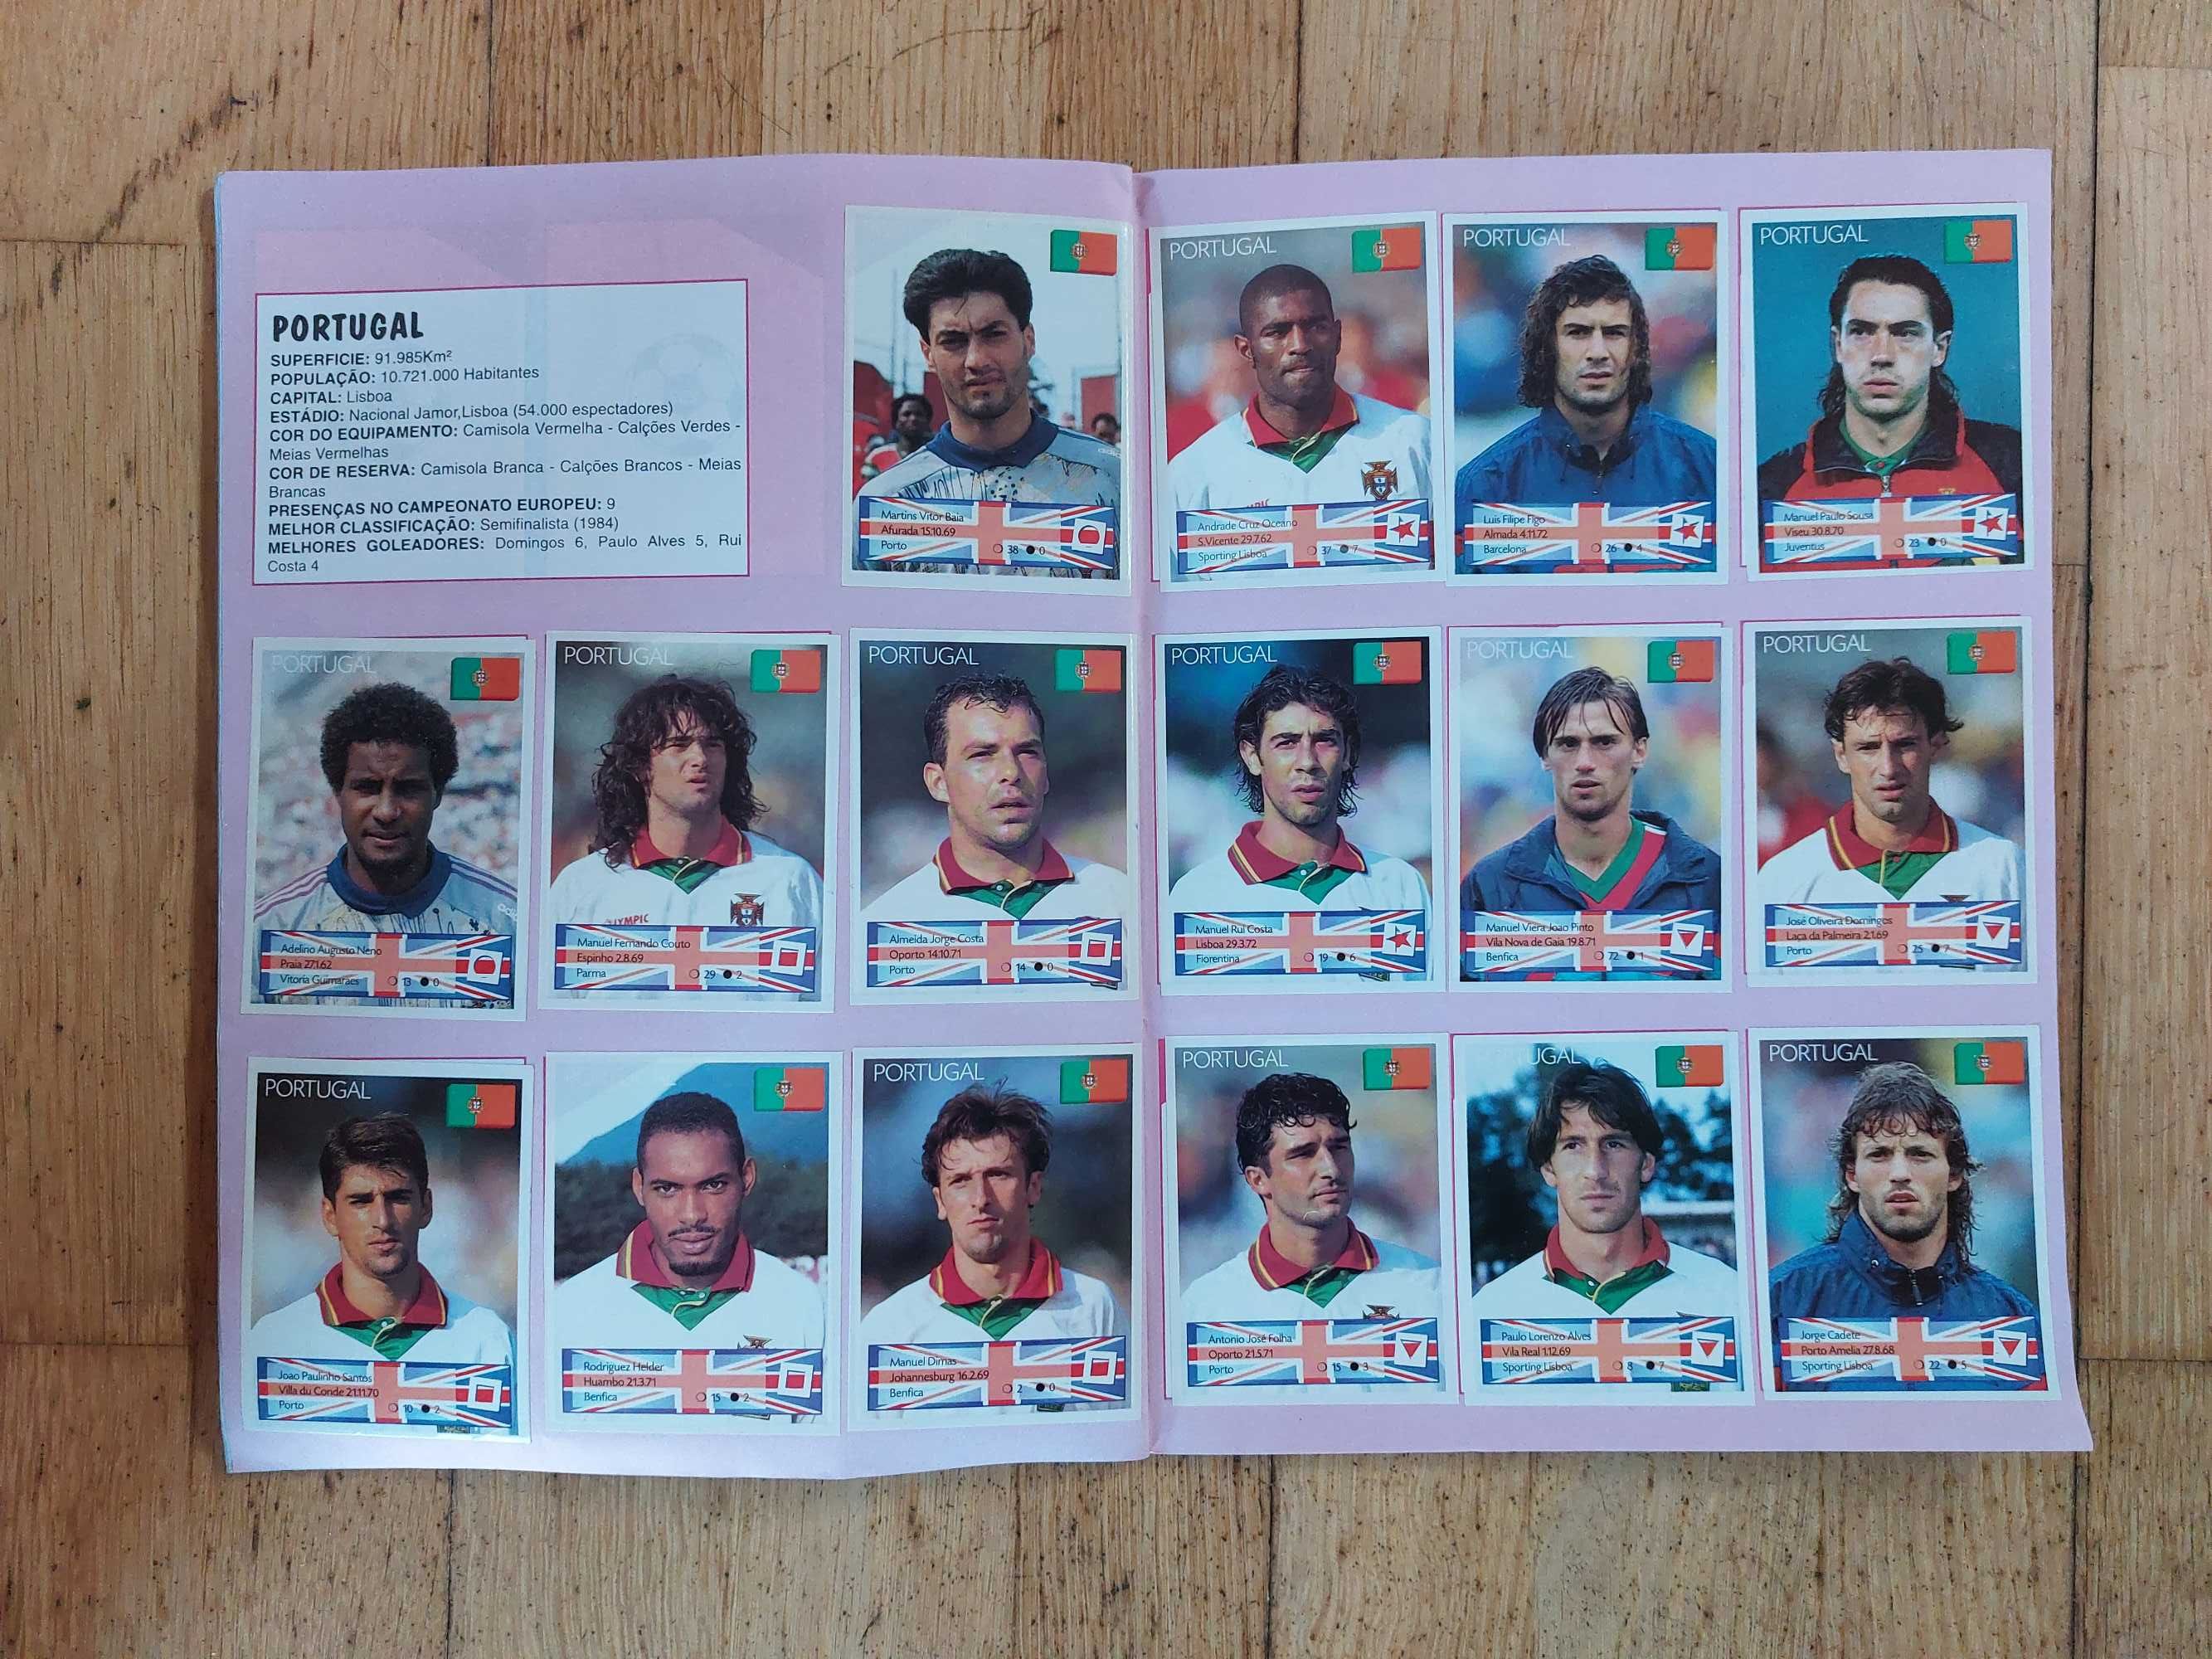 Caderneta de cromos "Eurocup 96" - Completa